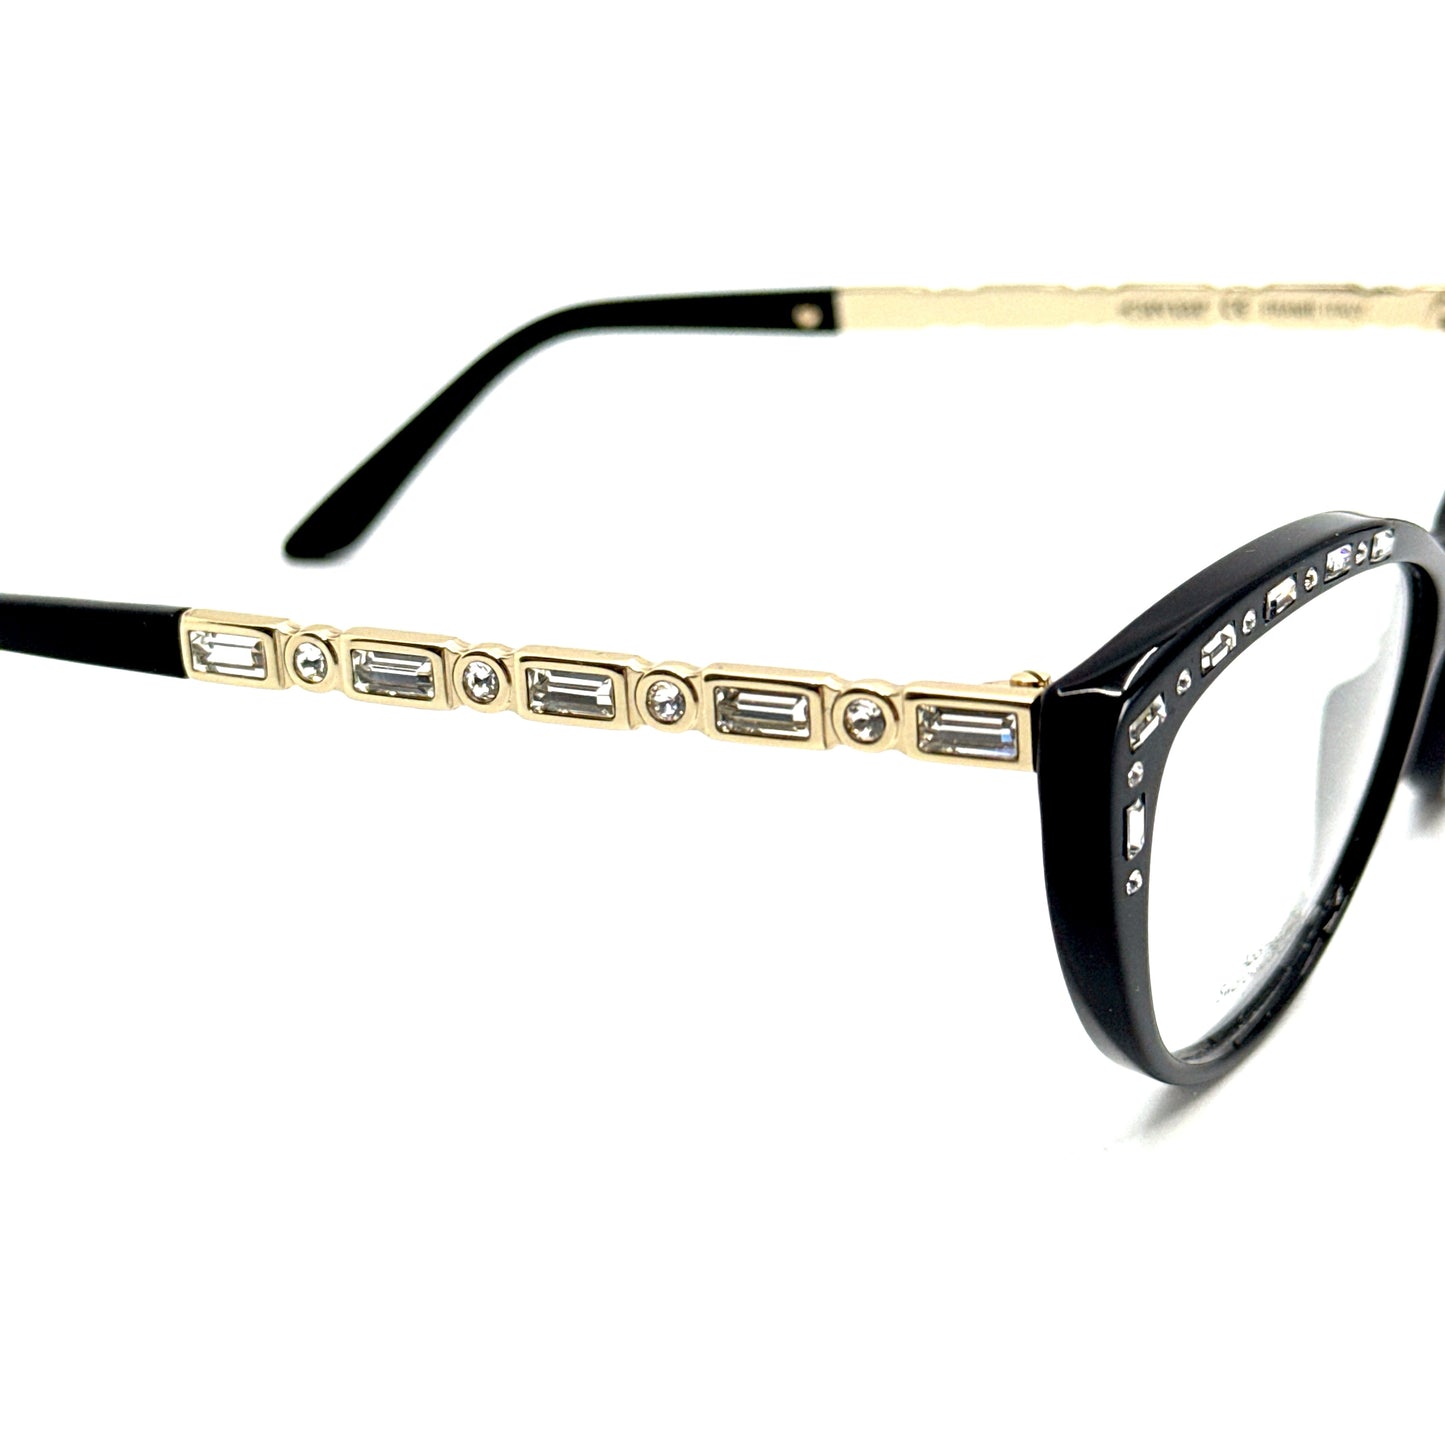 CAVIAR Eyeglasses M3020 C24